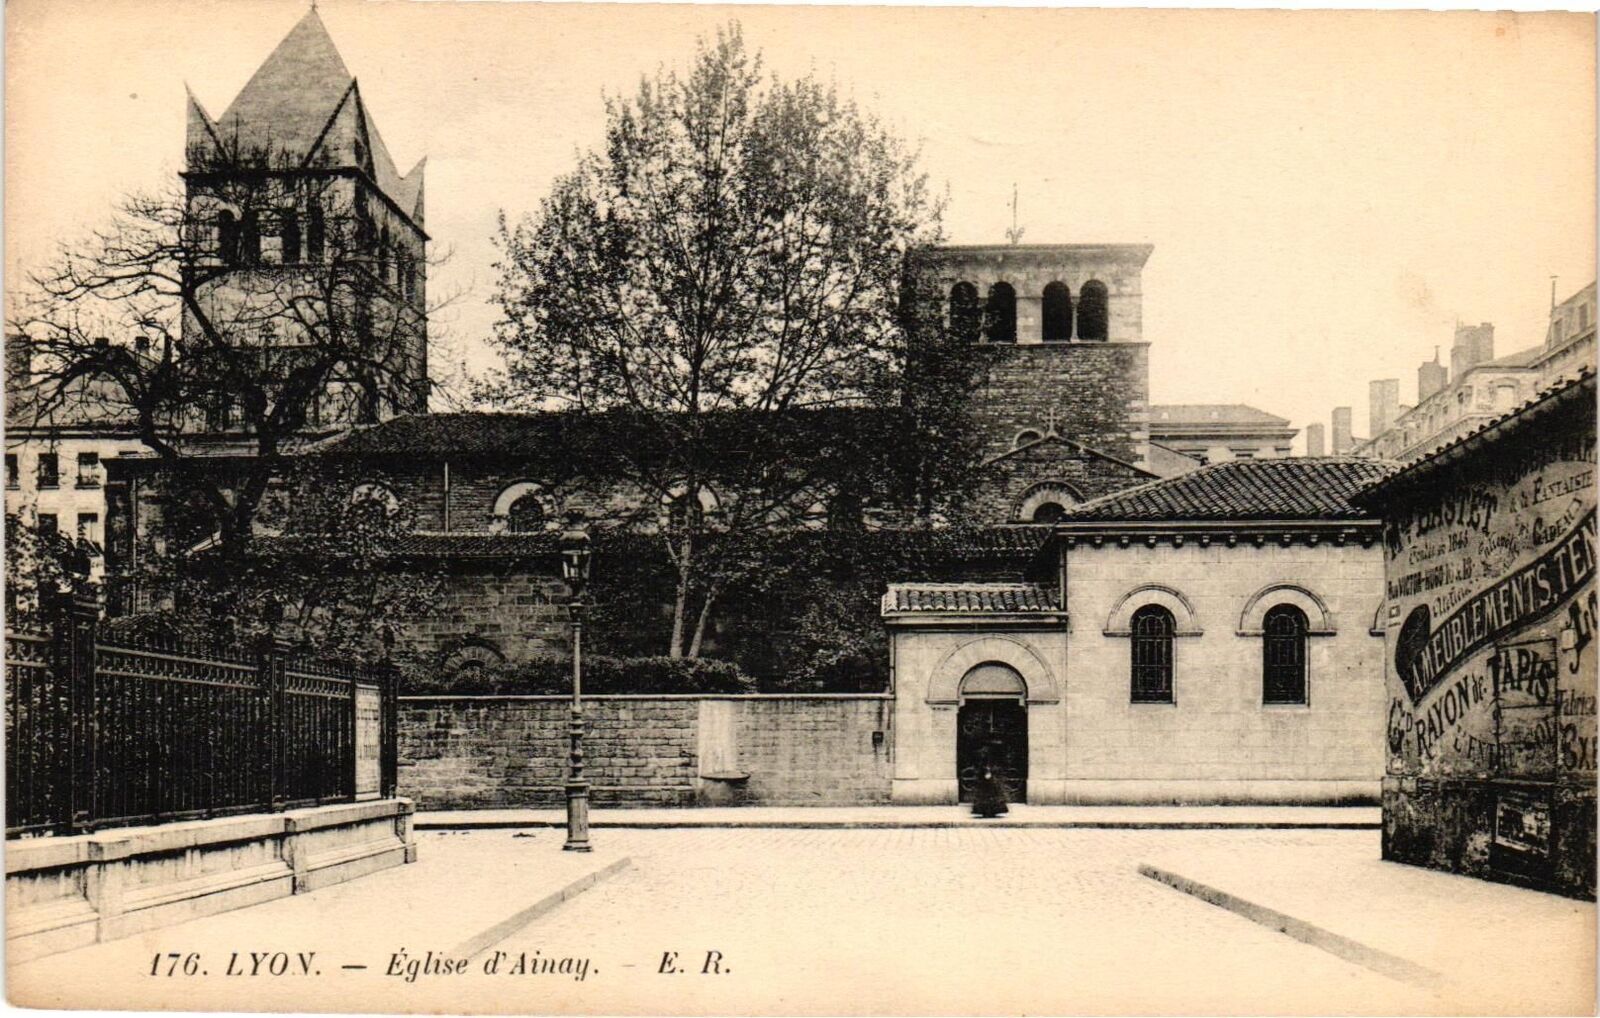 Vintage Postcard- Eglise d'Ainay, Lyon Early 1900s